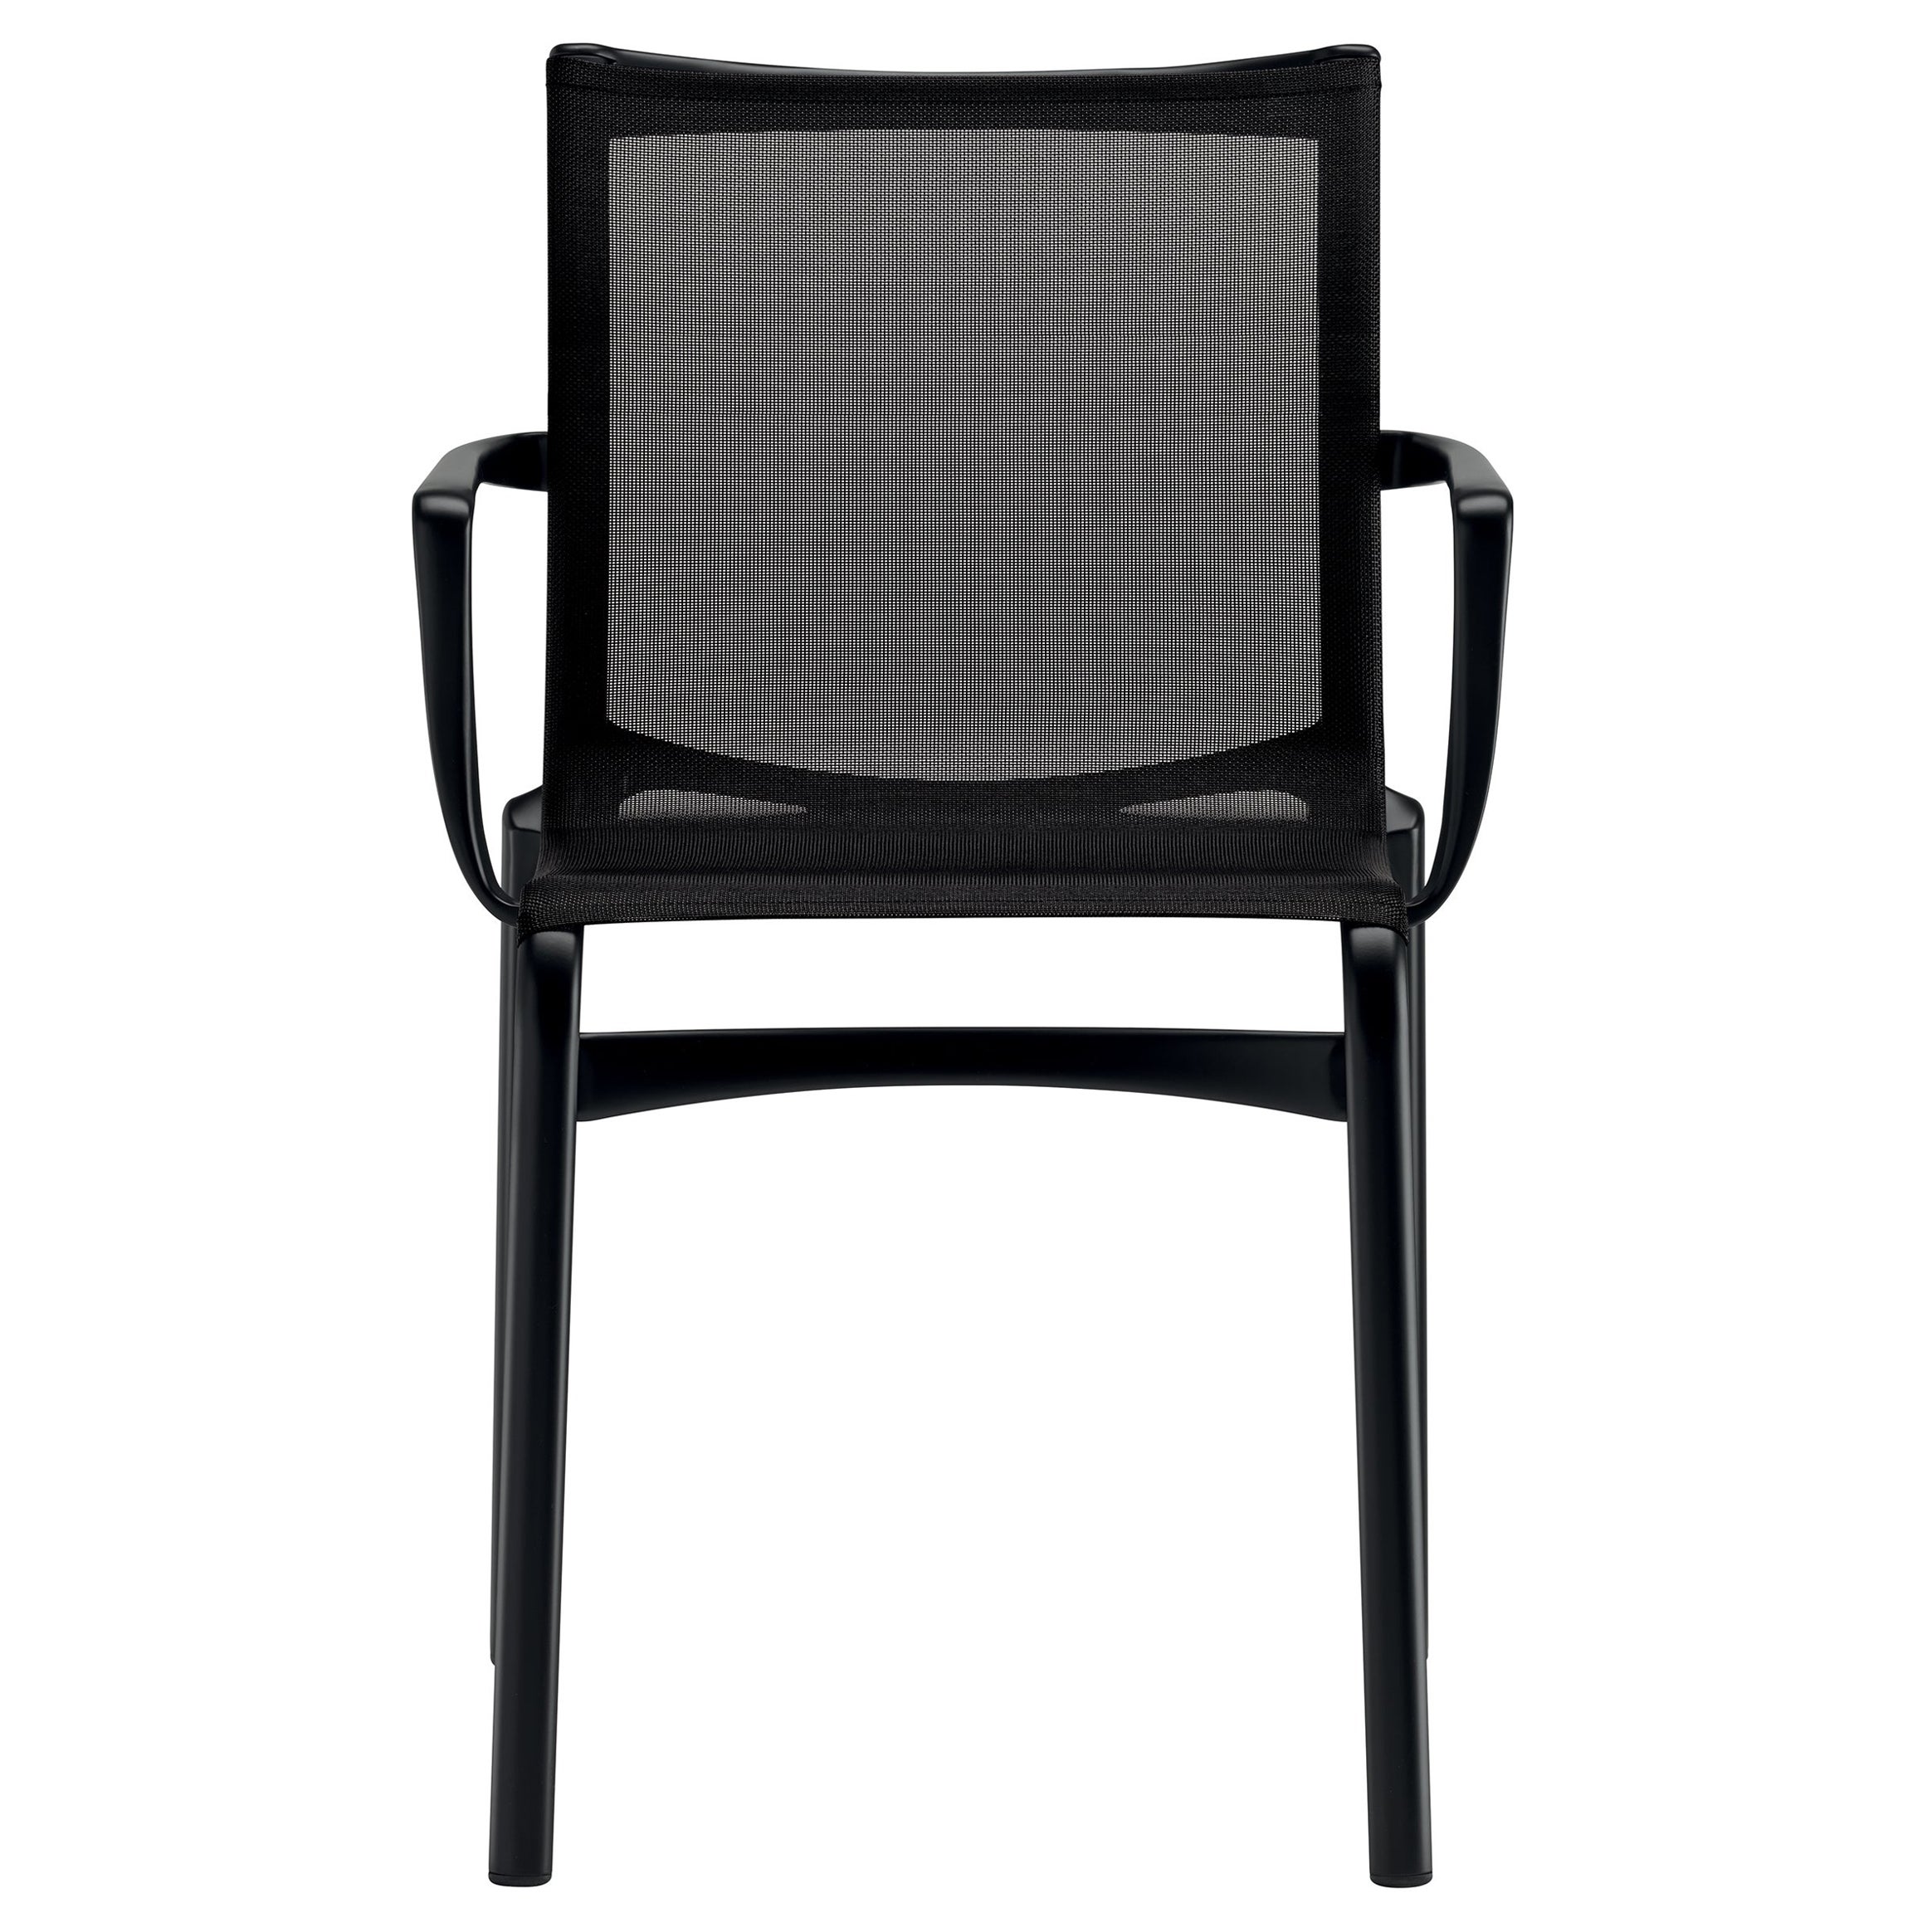 Alias Bigframe 44, Sessel aus schwarzem Netzgeflecht mit lackiertem Aluminiumrahmen